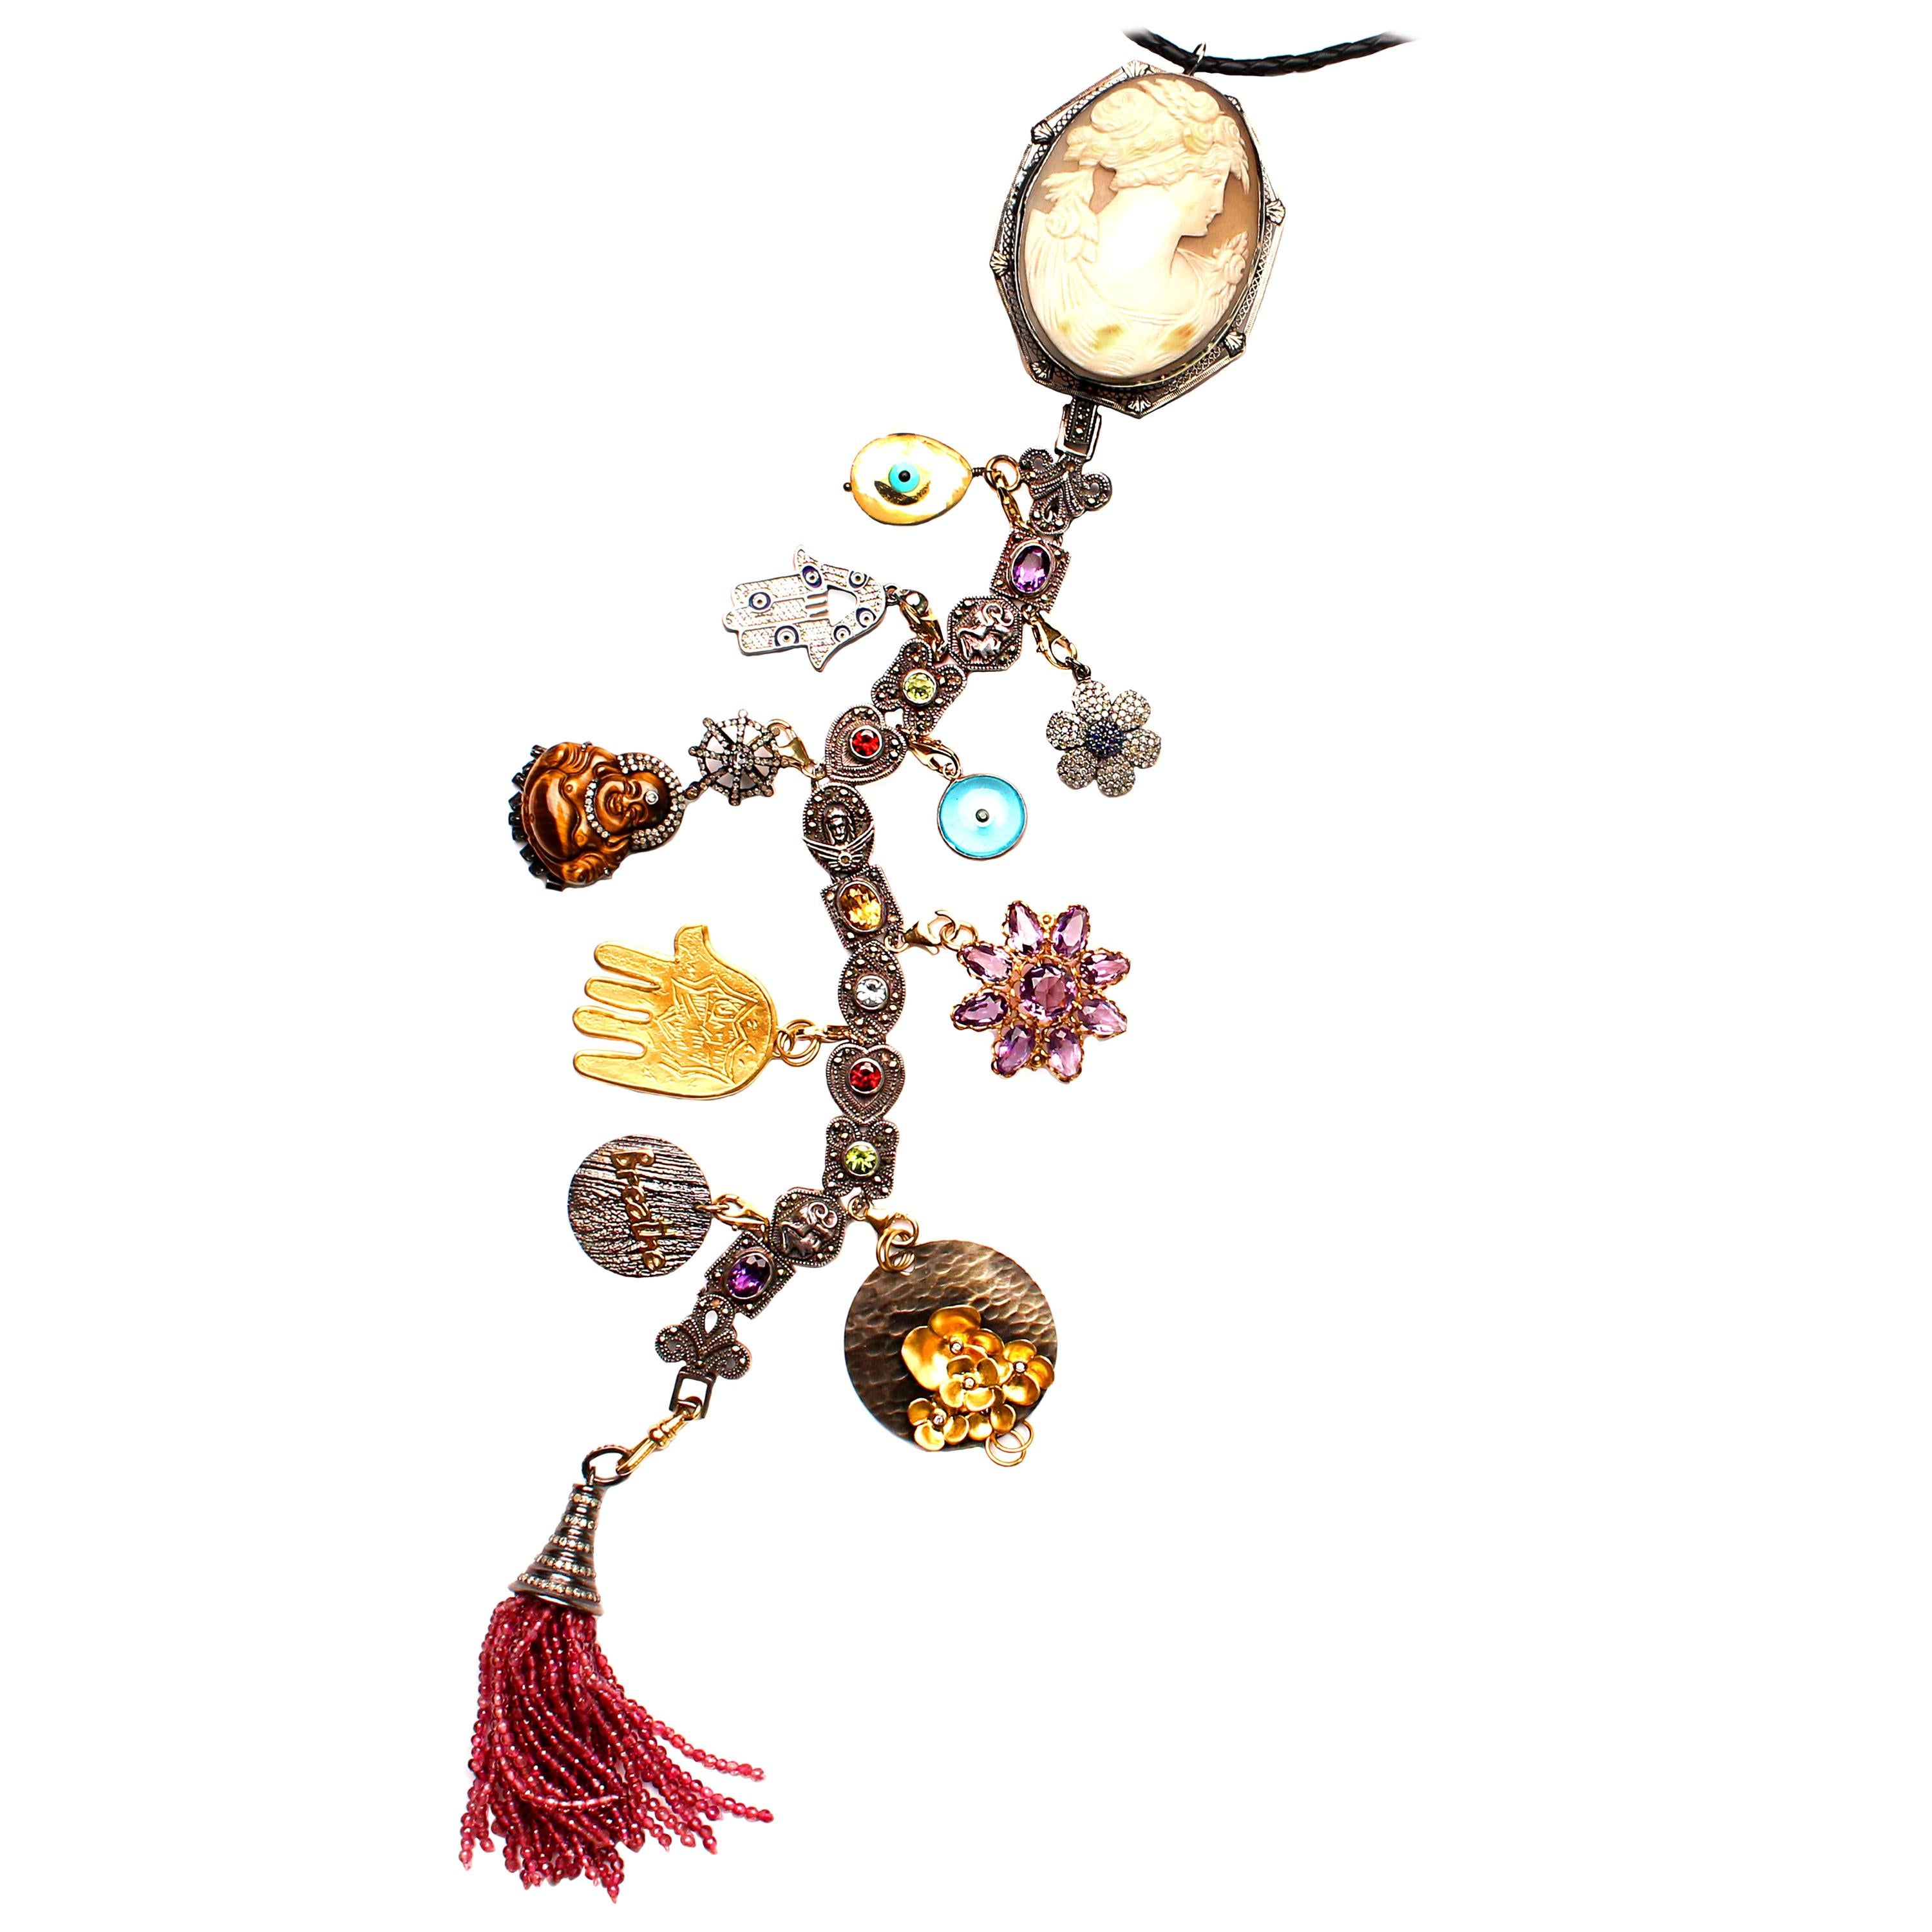 Clarissa Bronfman 'Empire of the Senses' Symbol Tree Necklace